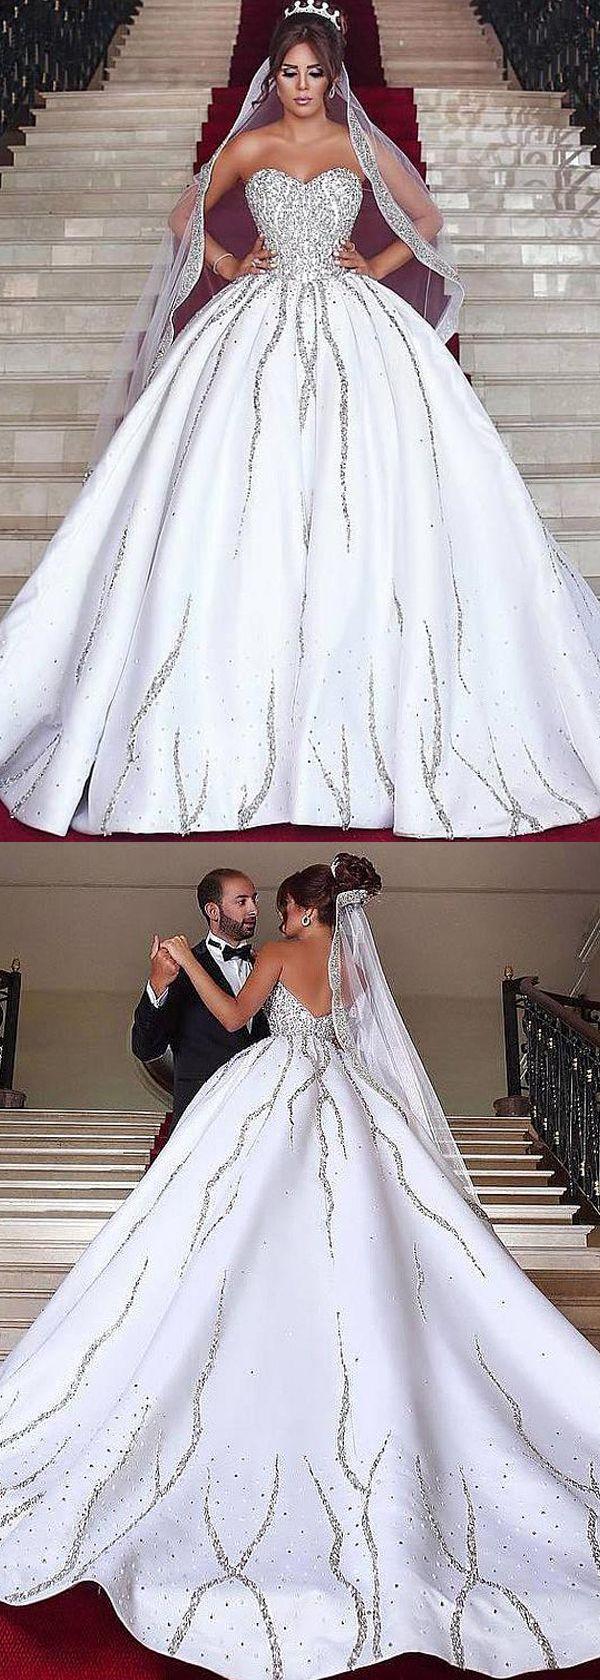 Wedding - Ball Gown Wedding Dress